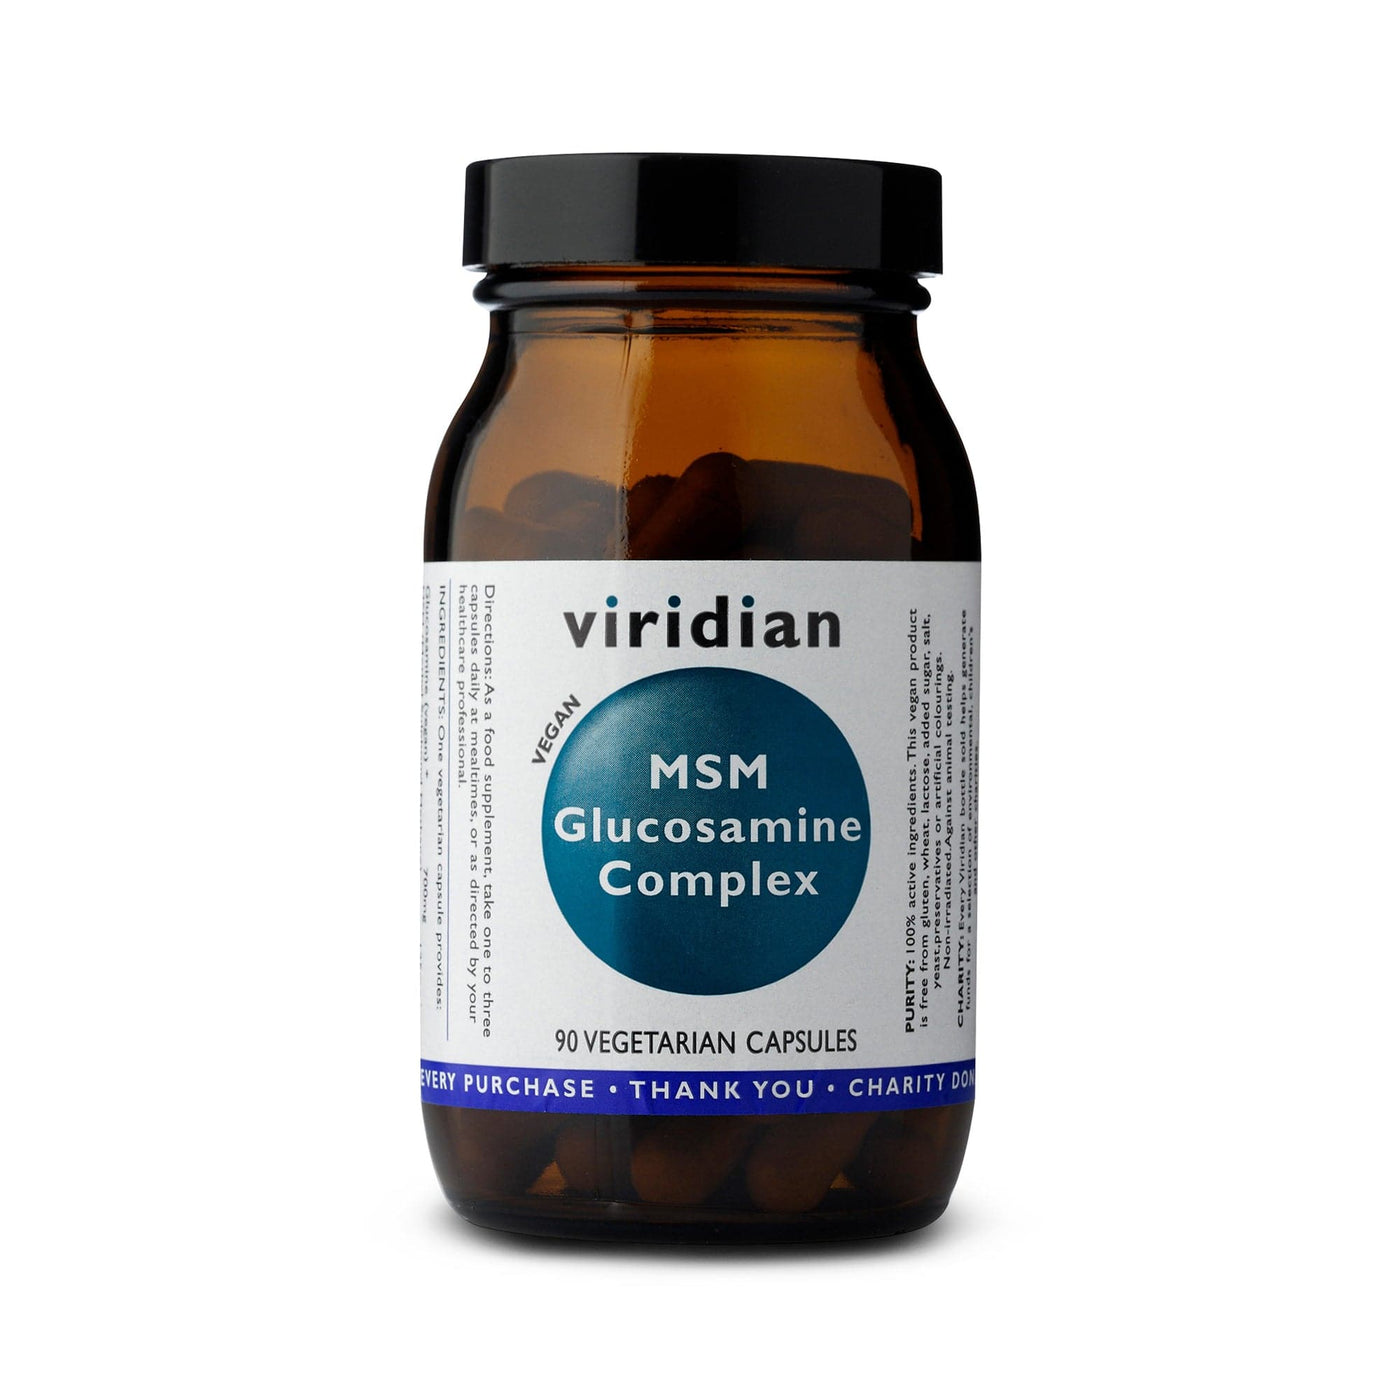 Neal's Yard Remedies Viridian Glucosamine with MSM Veg Caps - 90 Capsules